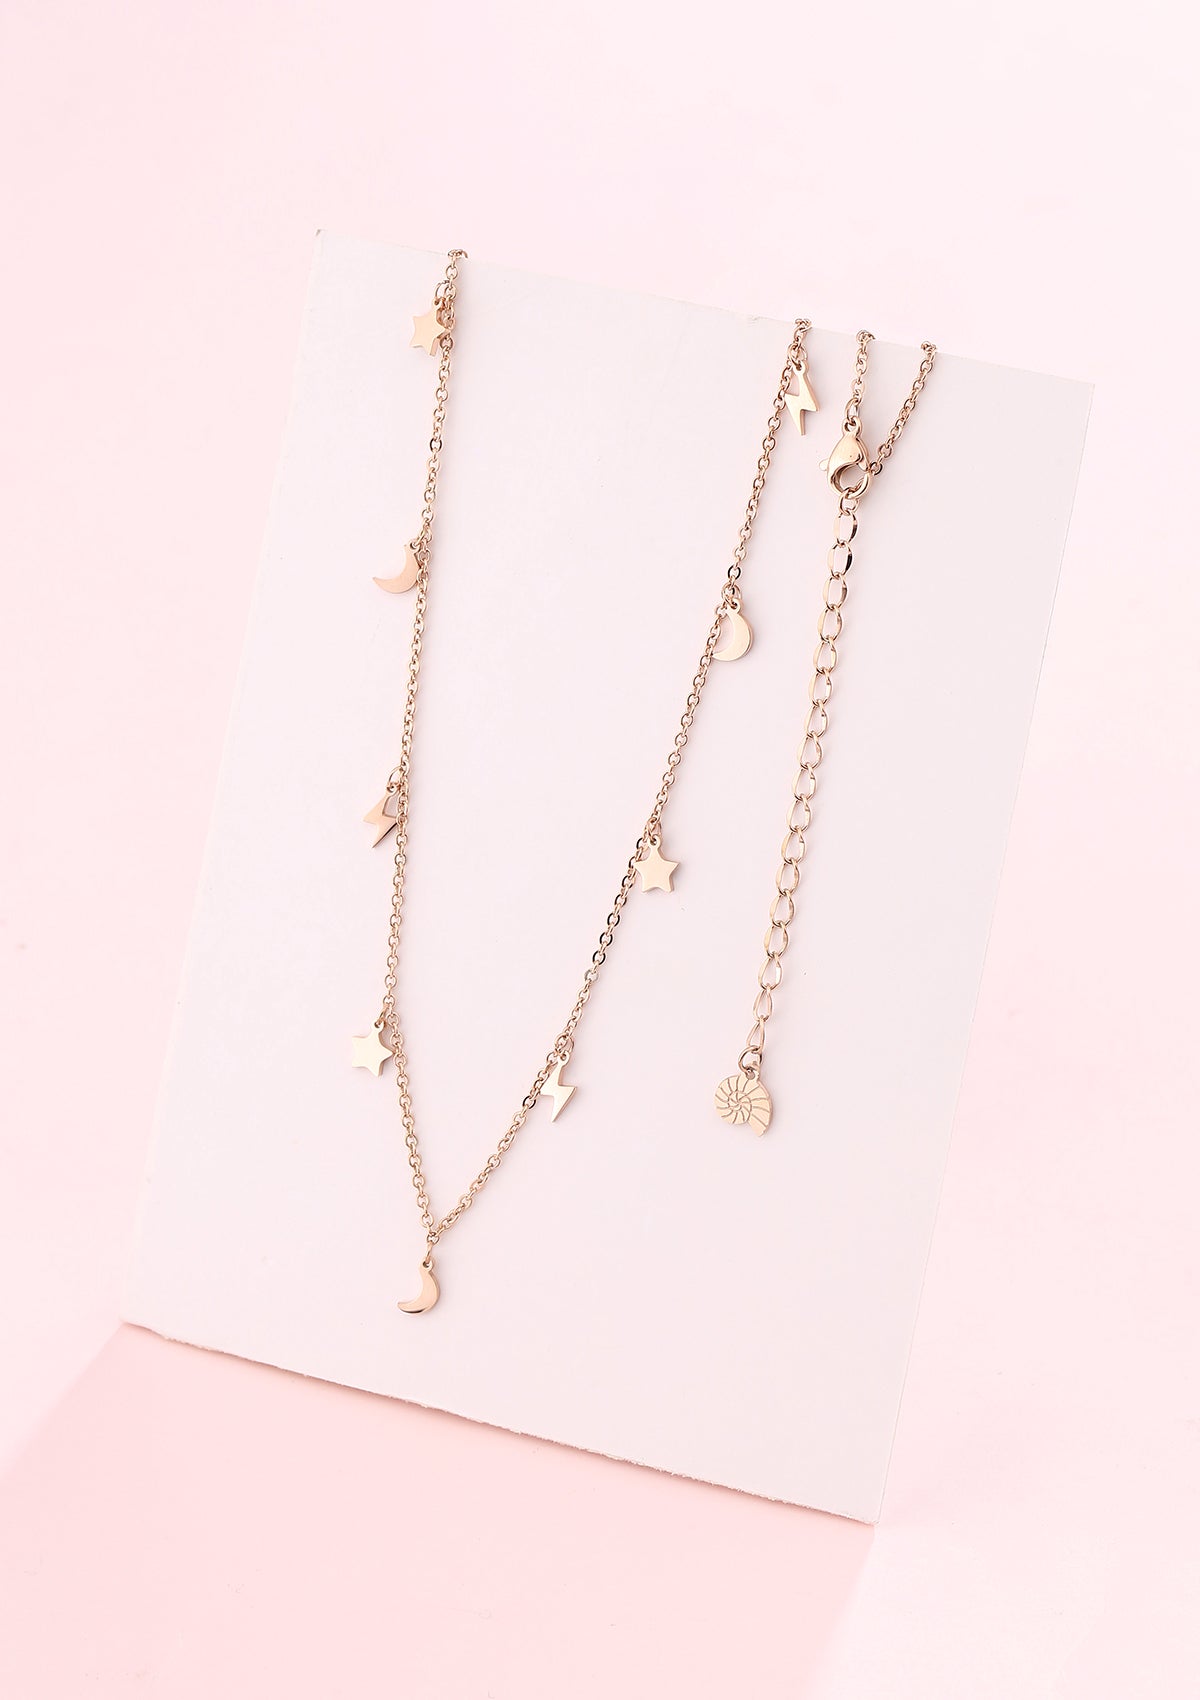 Celestial Inspiration Necklace Set in Rose Gold